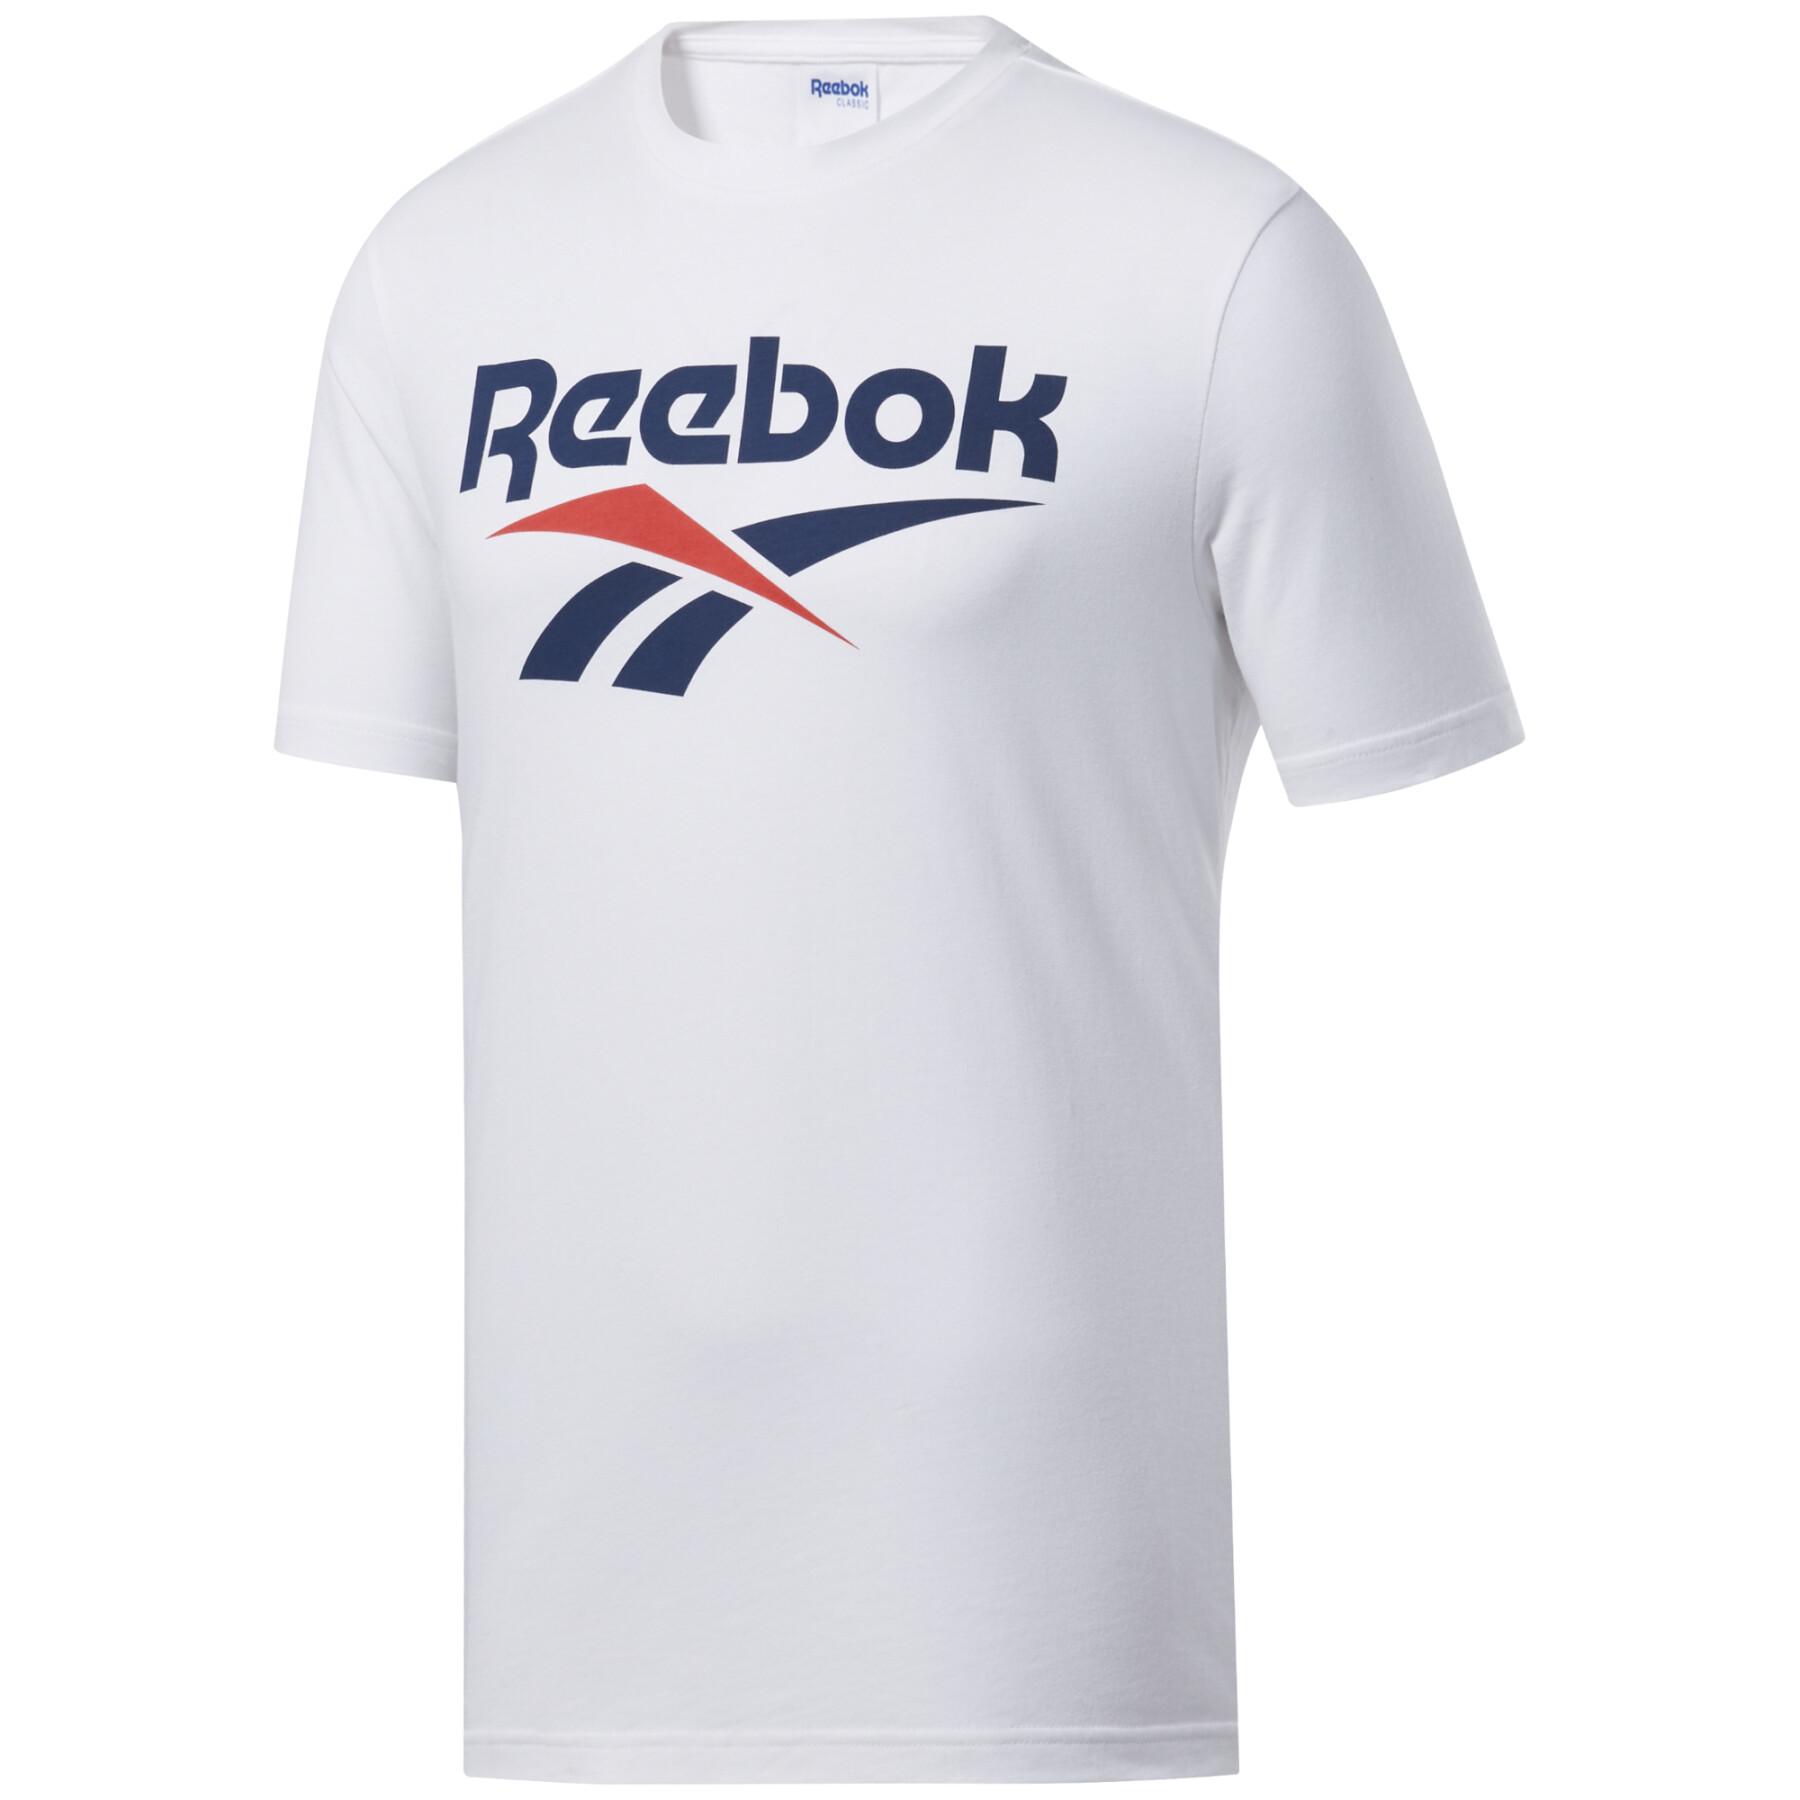 Koszulka Reebok Vector Logo